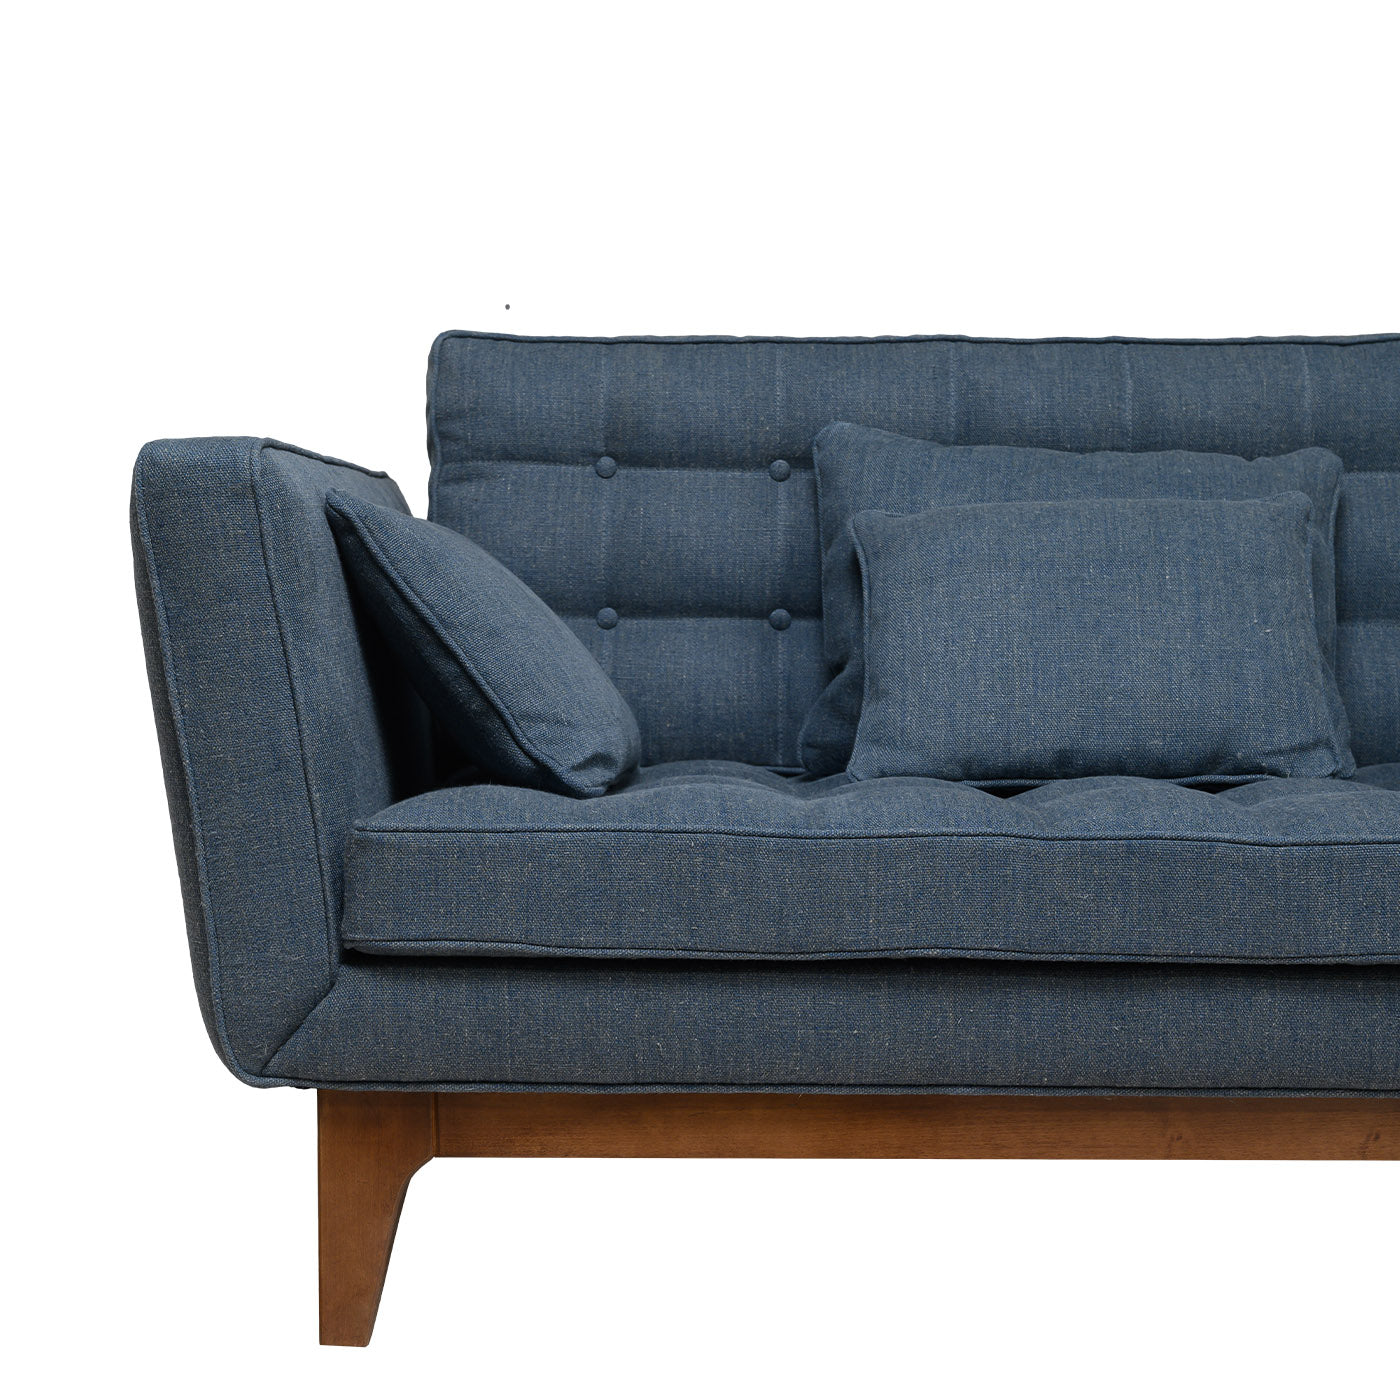 Yvan 3-Seater Blue Sofa - Alternative view 1